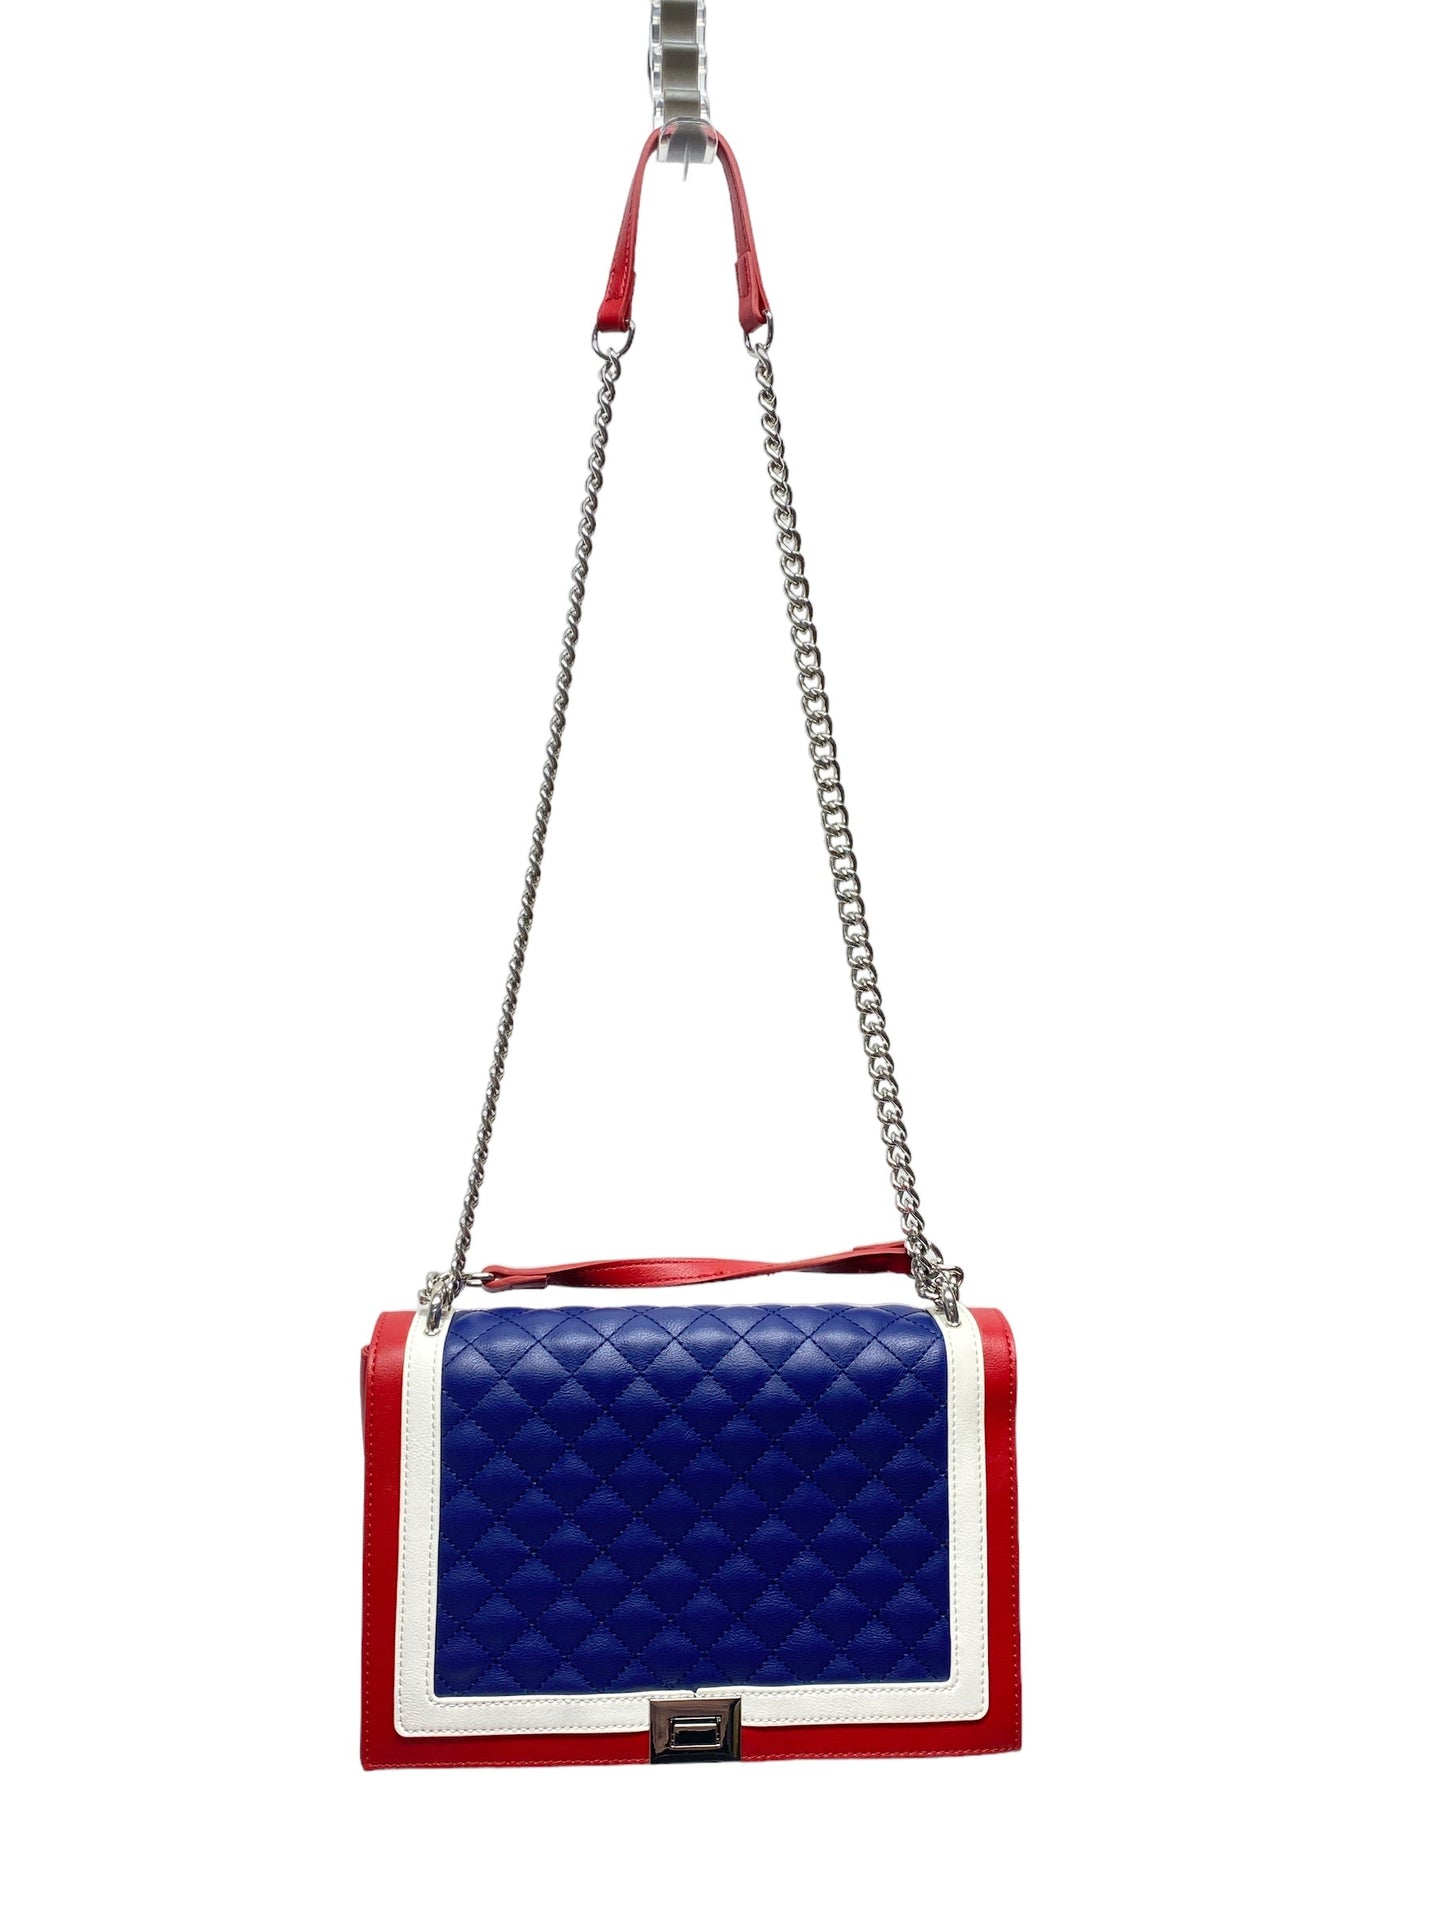 Handbag By Inc  Size: Medium